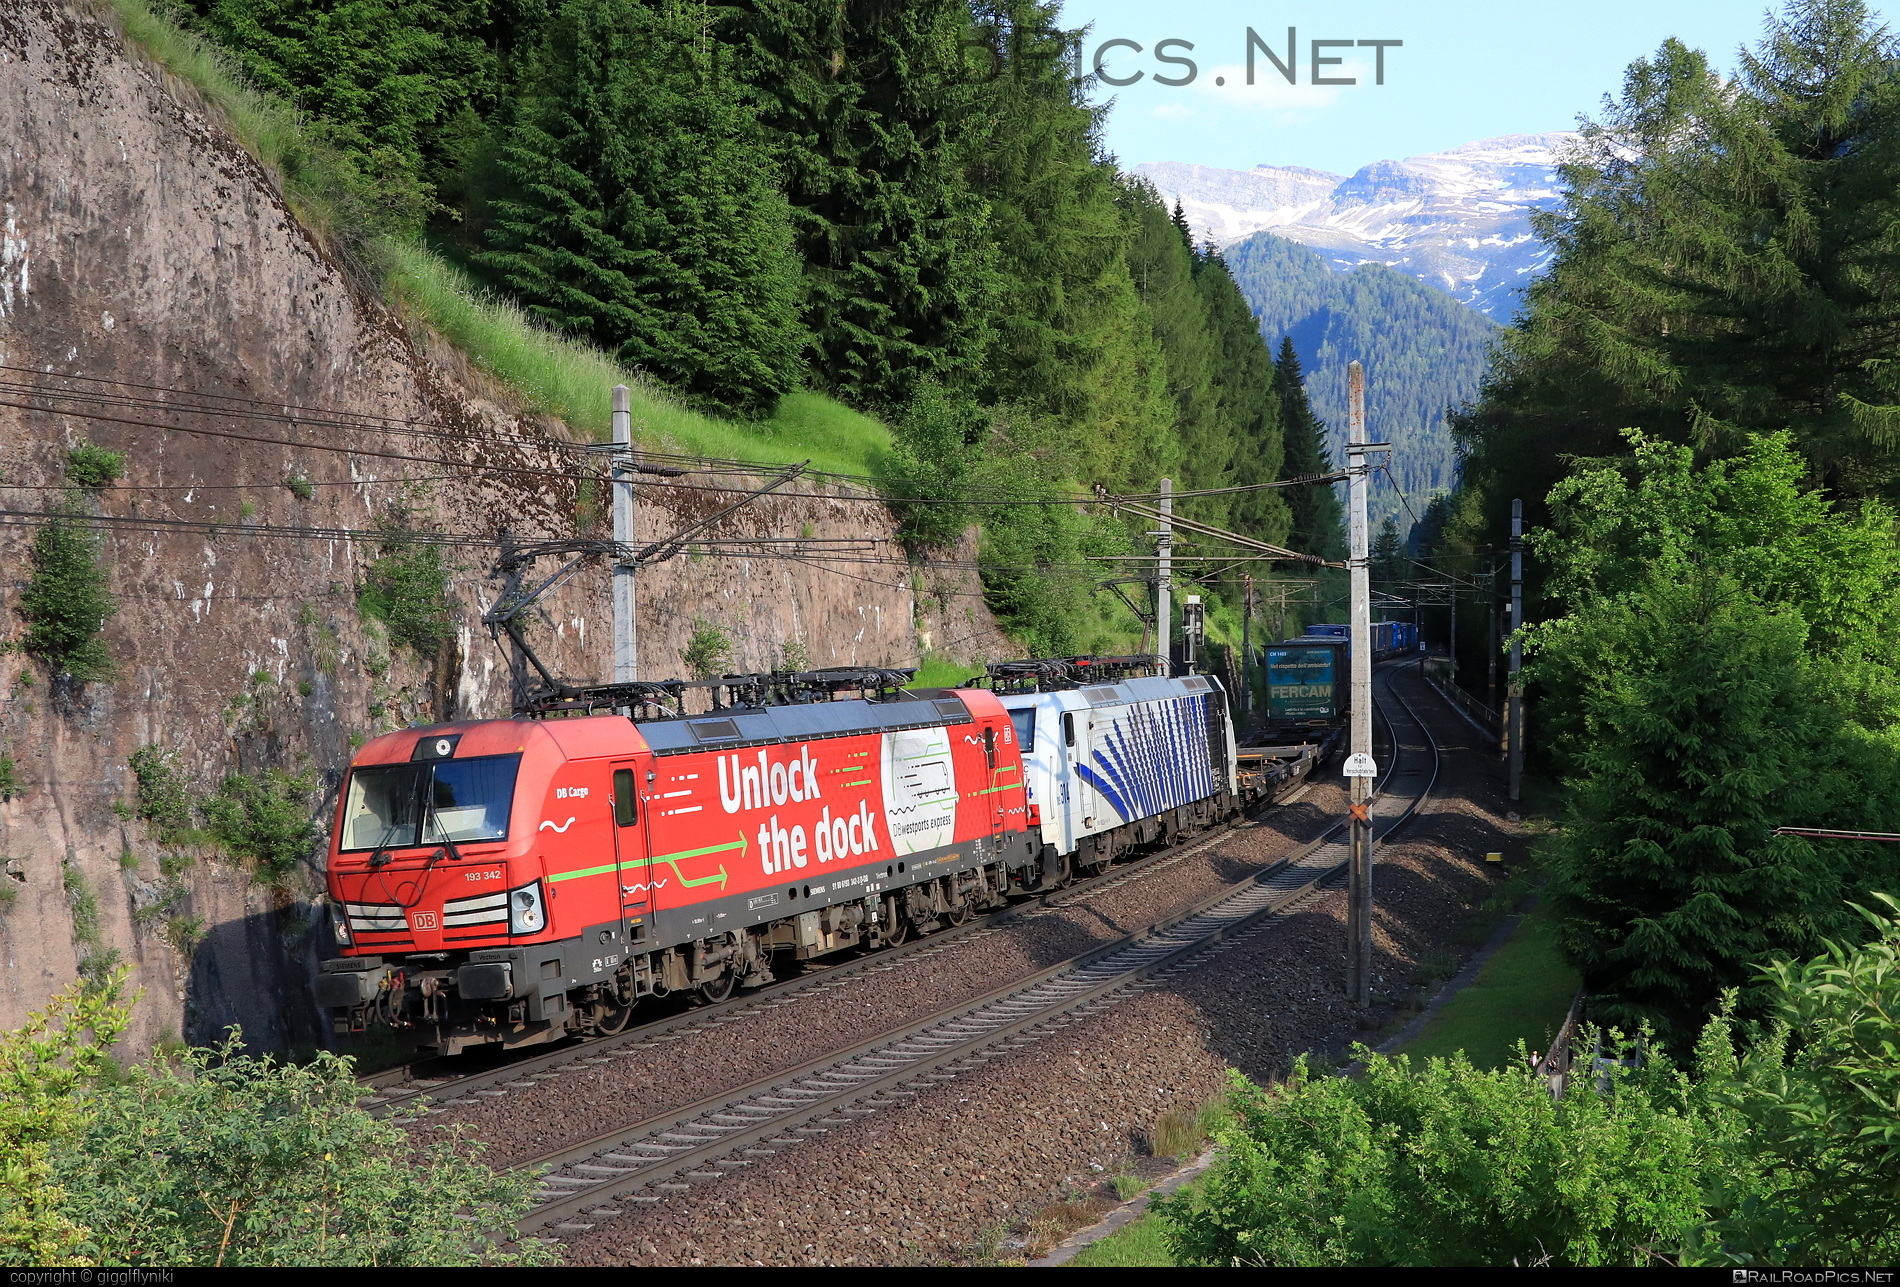 Siemens Vectron MS - 193 342 operated by DB Cargo AG #db #dbcargo #dbcargoag #deutschebahn #flatwagon #siemens #siemensVectron #siemensVectronMS #vectron #vectronMS